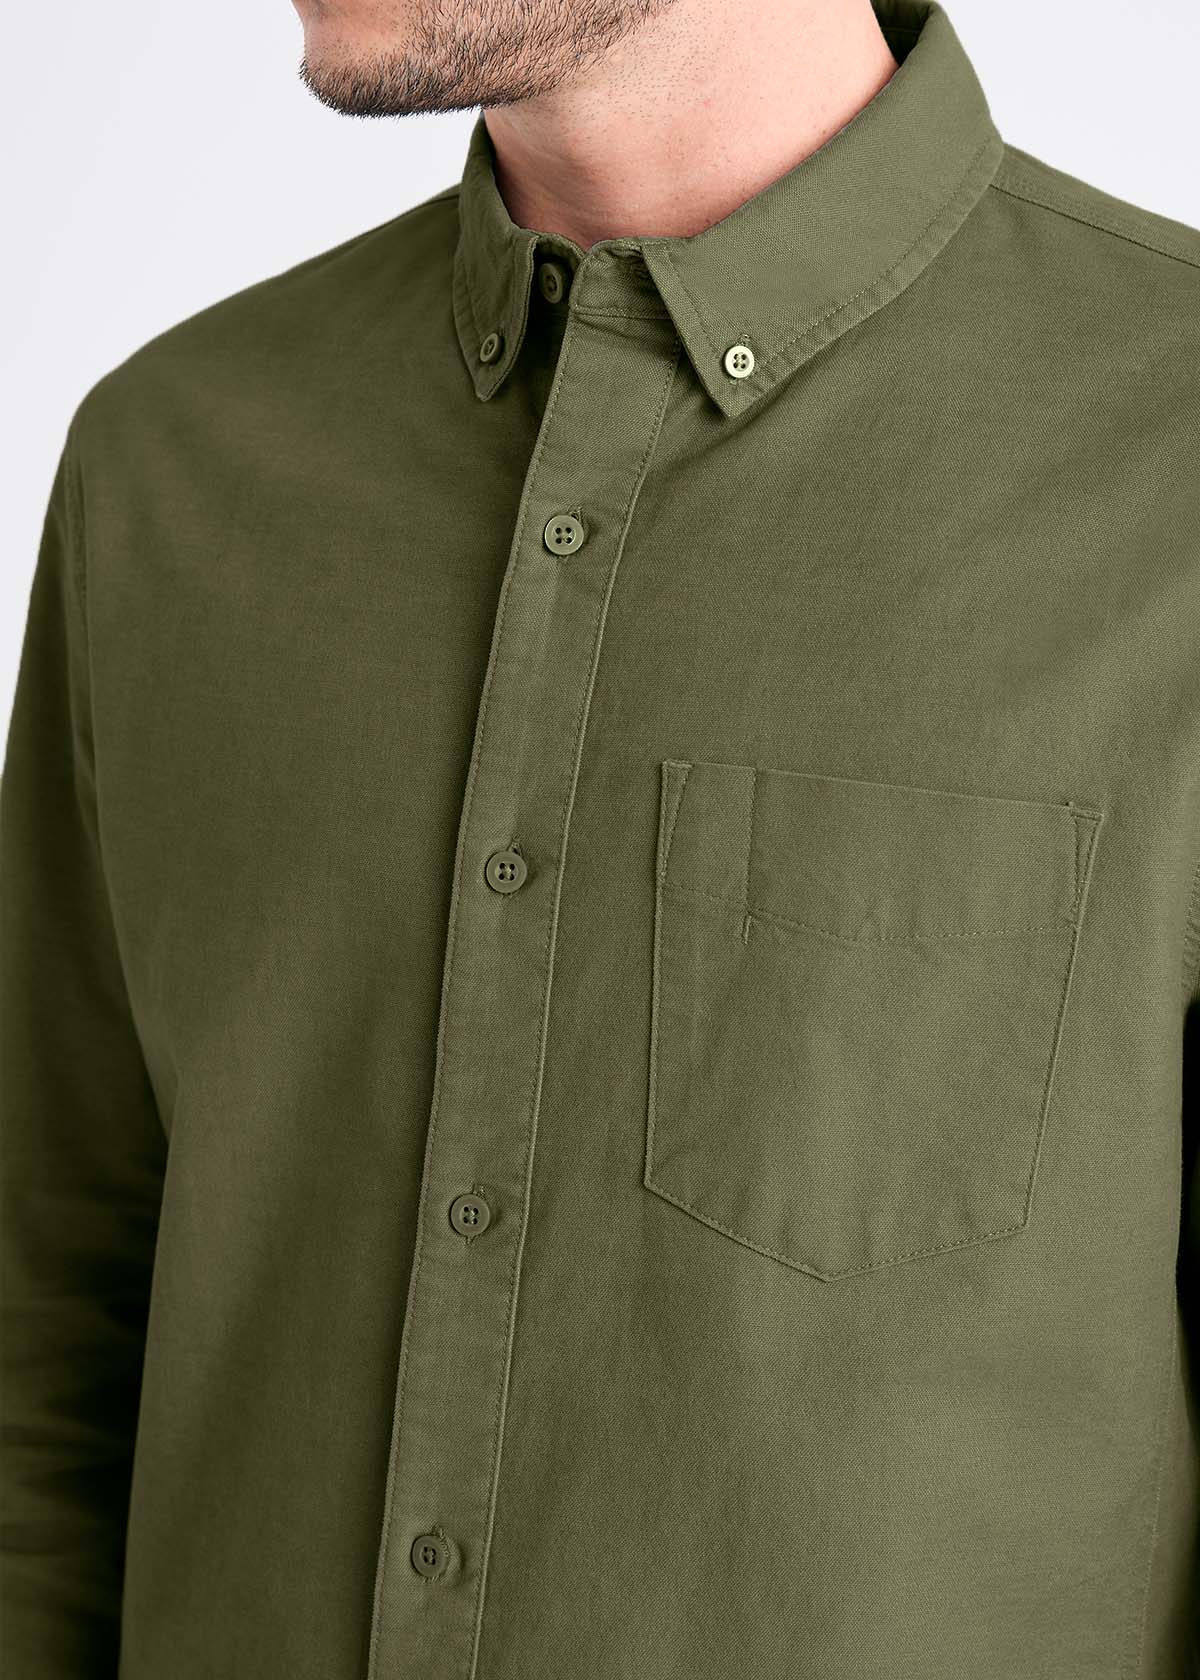 mens green stretch button down shirt chest pocket detail